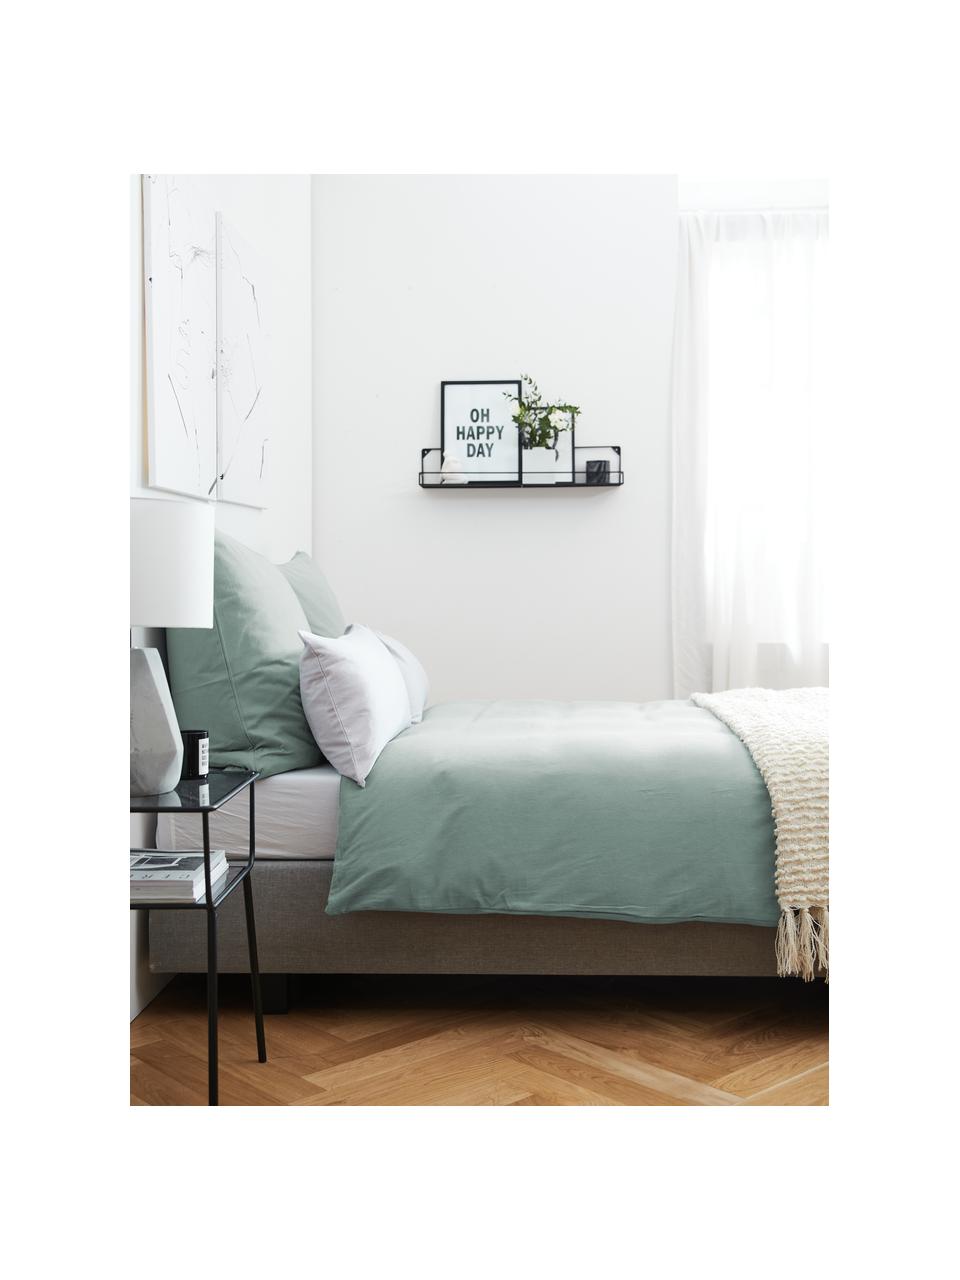 Flanelová posteľná bielizeň Biba, šalviová, Šalviovozelená, 155 x 220 cm + 1 vankúš 80 x 80 cm